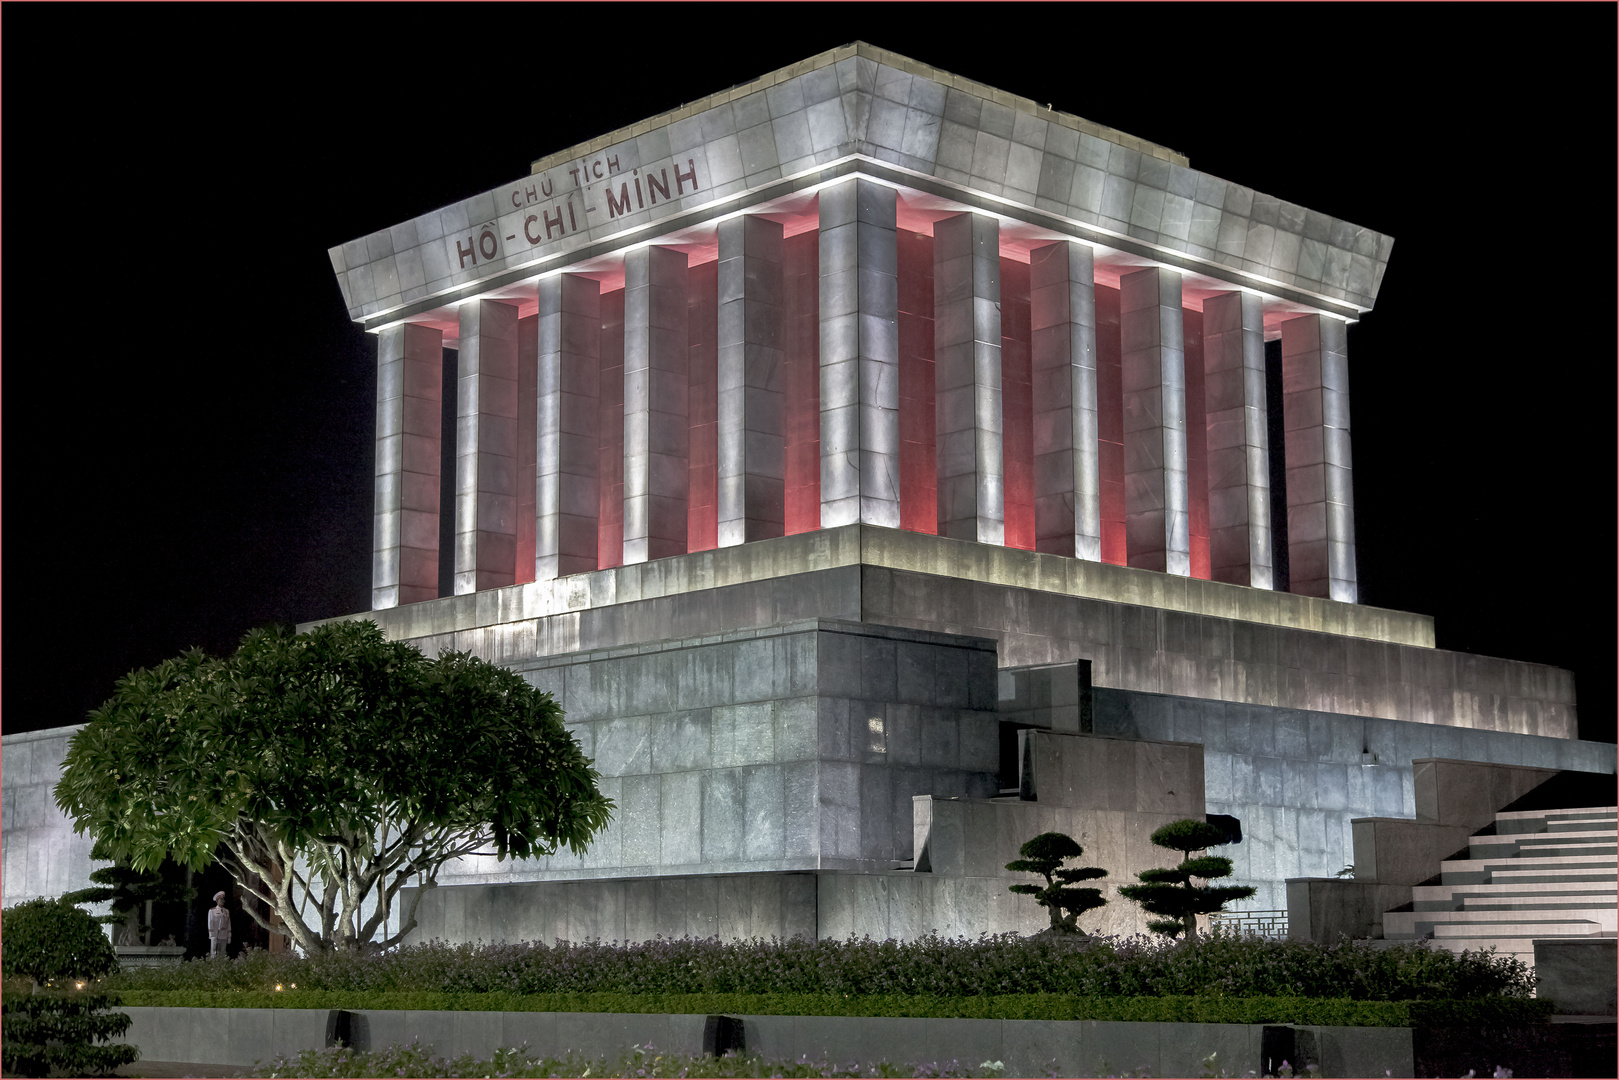 Ho-Chi-Minh Mausoleum Hanoi